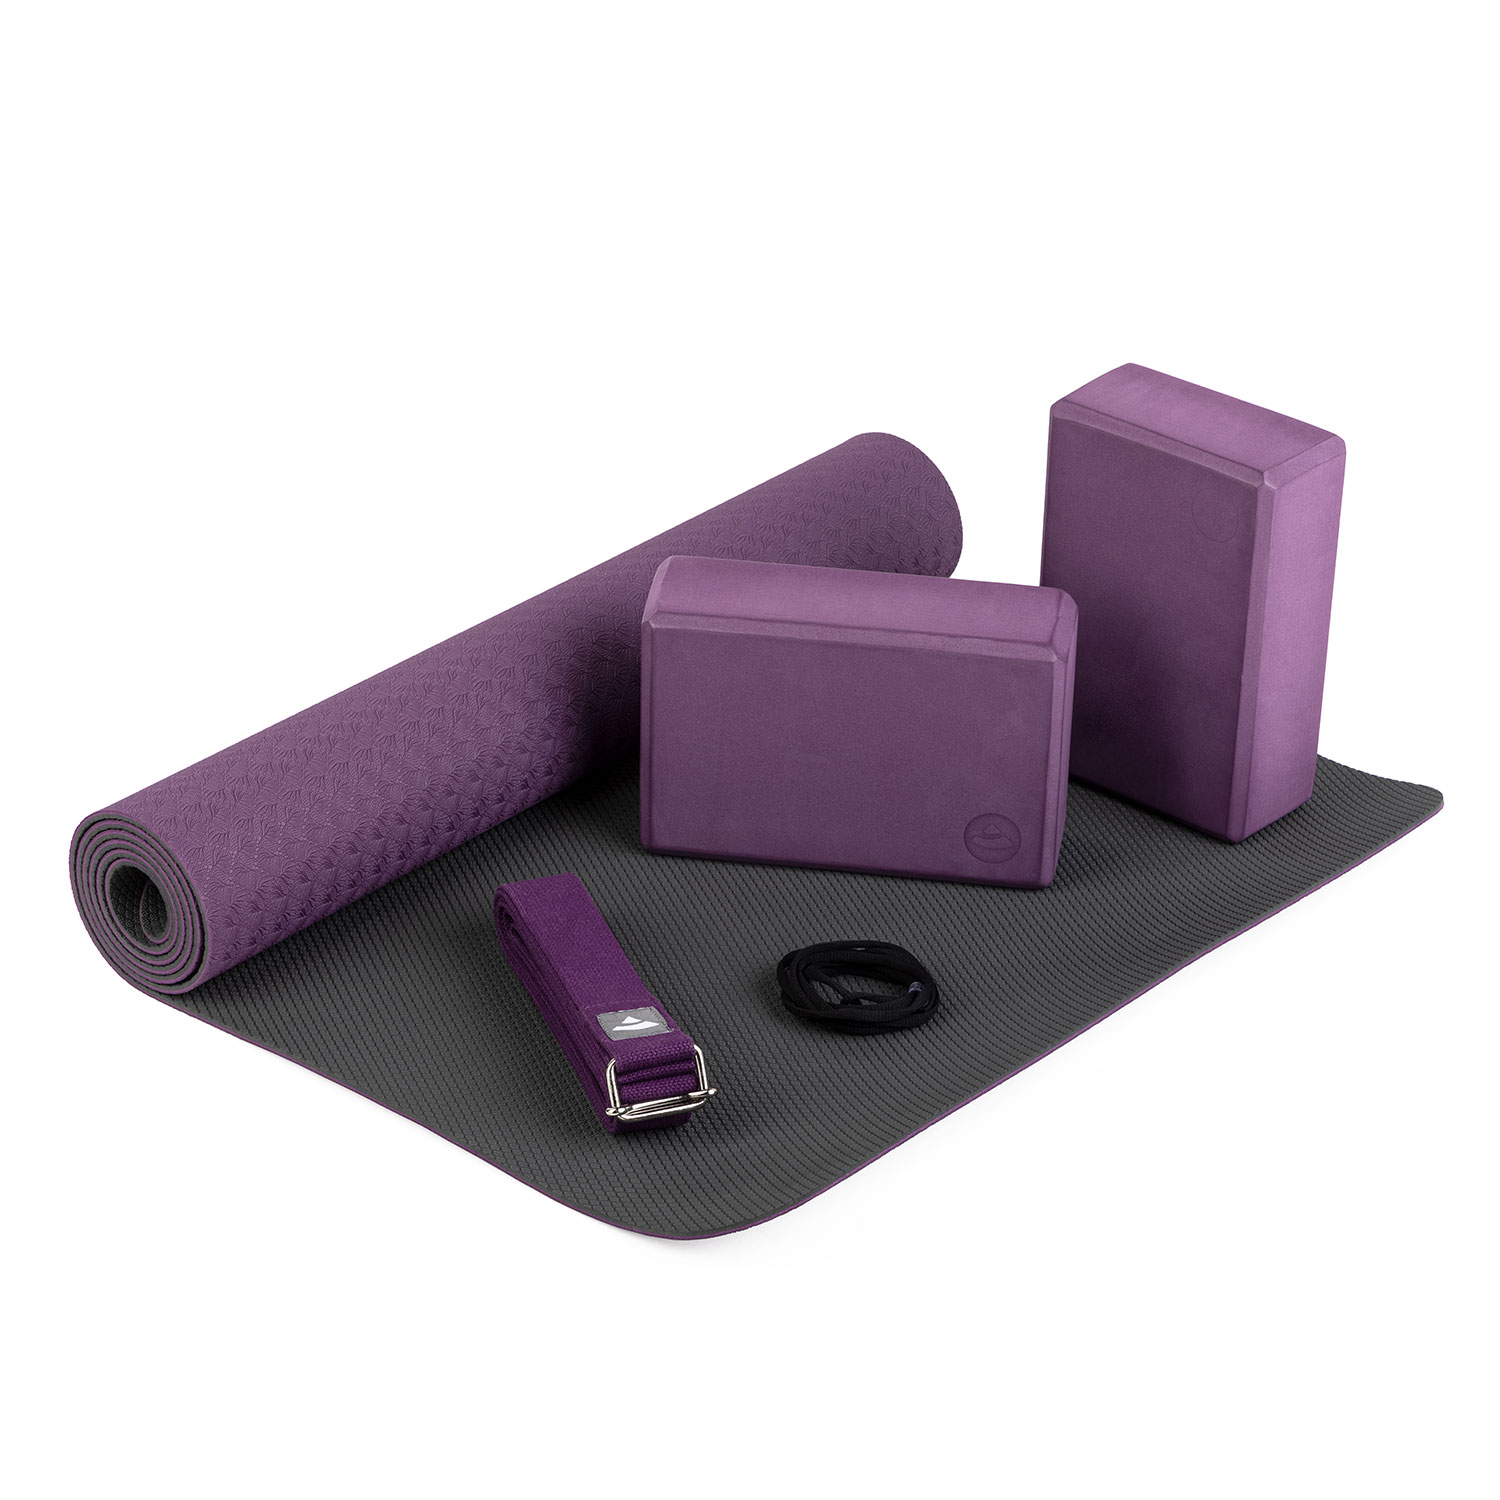  Yoga Mat Set For Men 7-Piece 1 6mm Yoga Mat